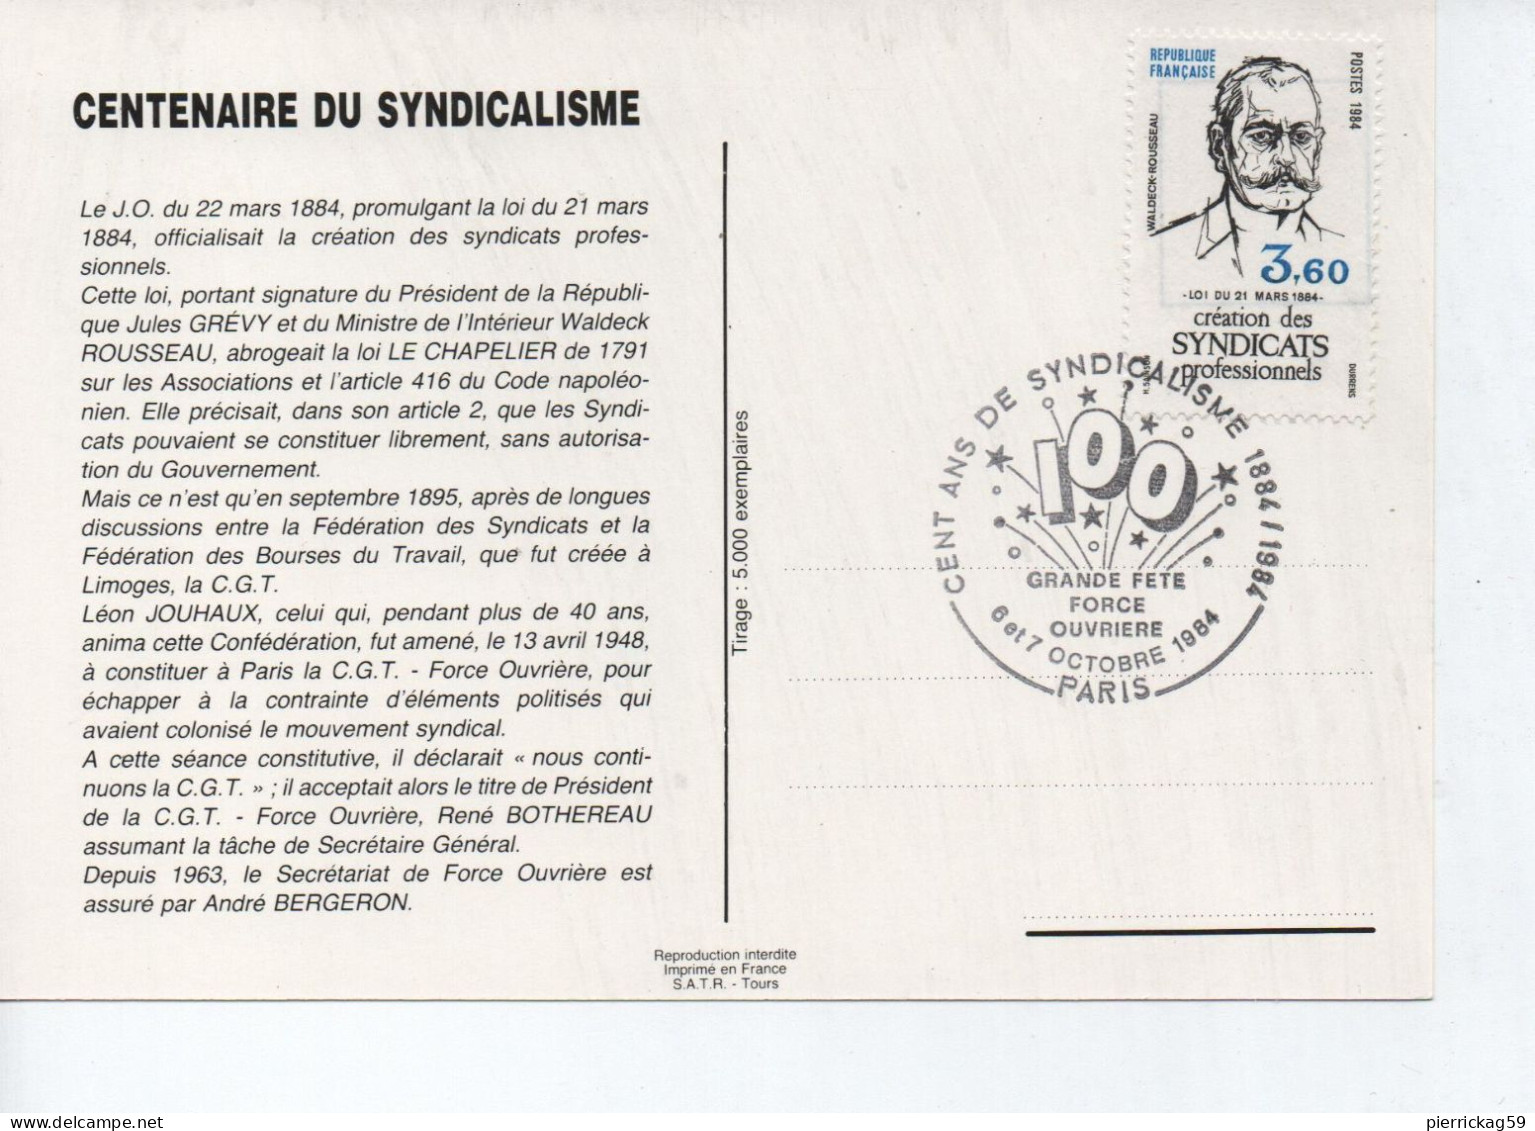 CPM  LE SYNDICALISME A 100 ANS 1884  / 1984 - Sindacati